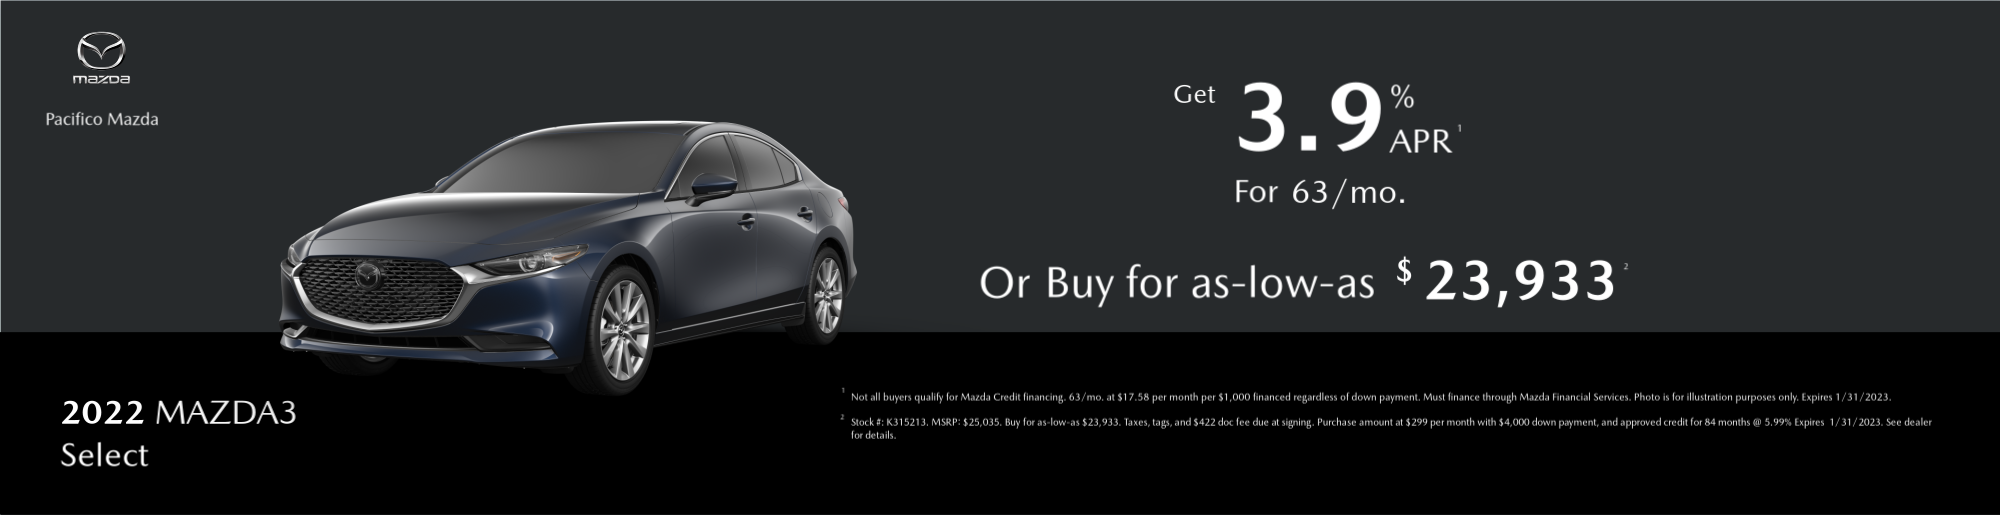 2022 Mazda3 Special Offer